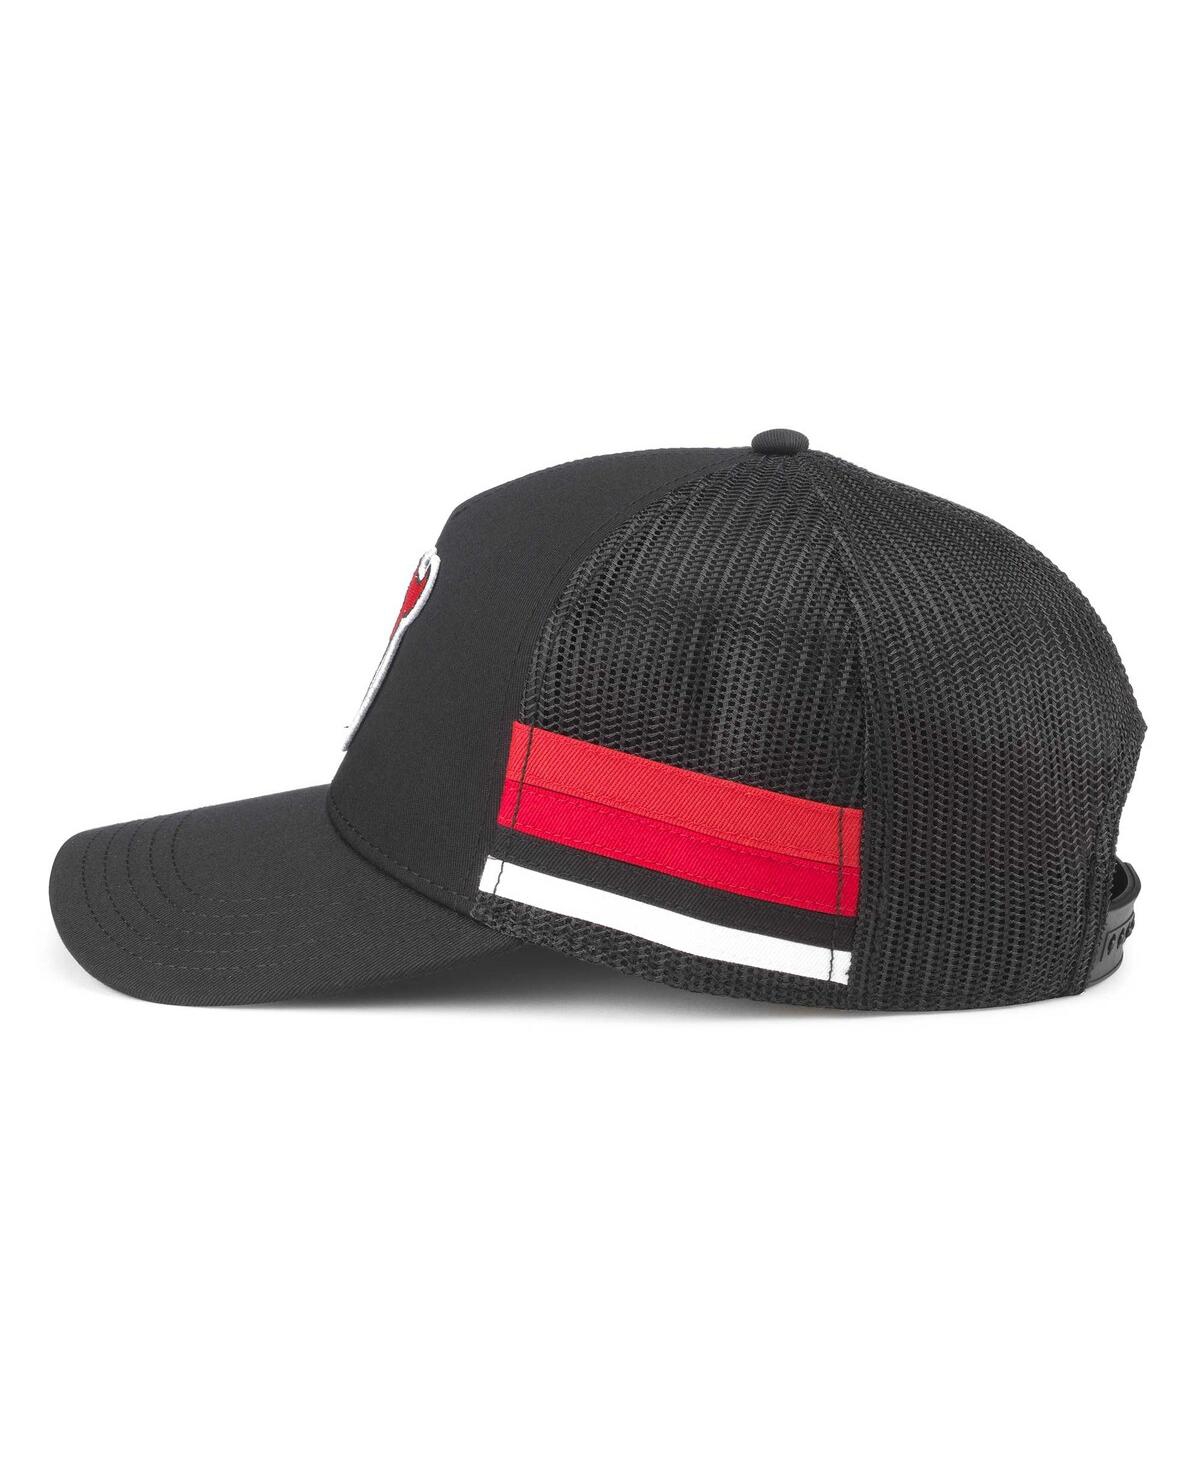 Shop American Needle Men's  Black New Jersey Devils Hotfoot Stripes Trucker Adjustable Hat